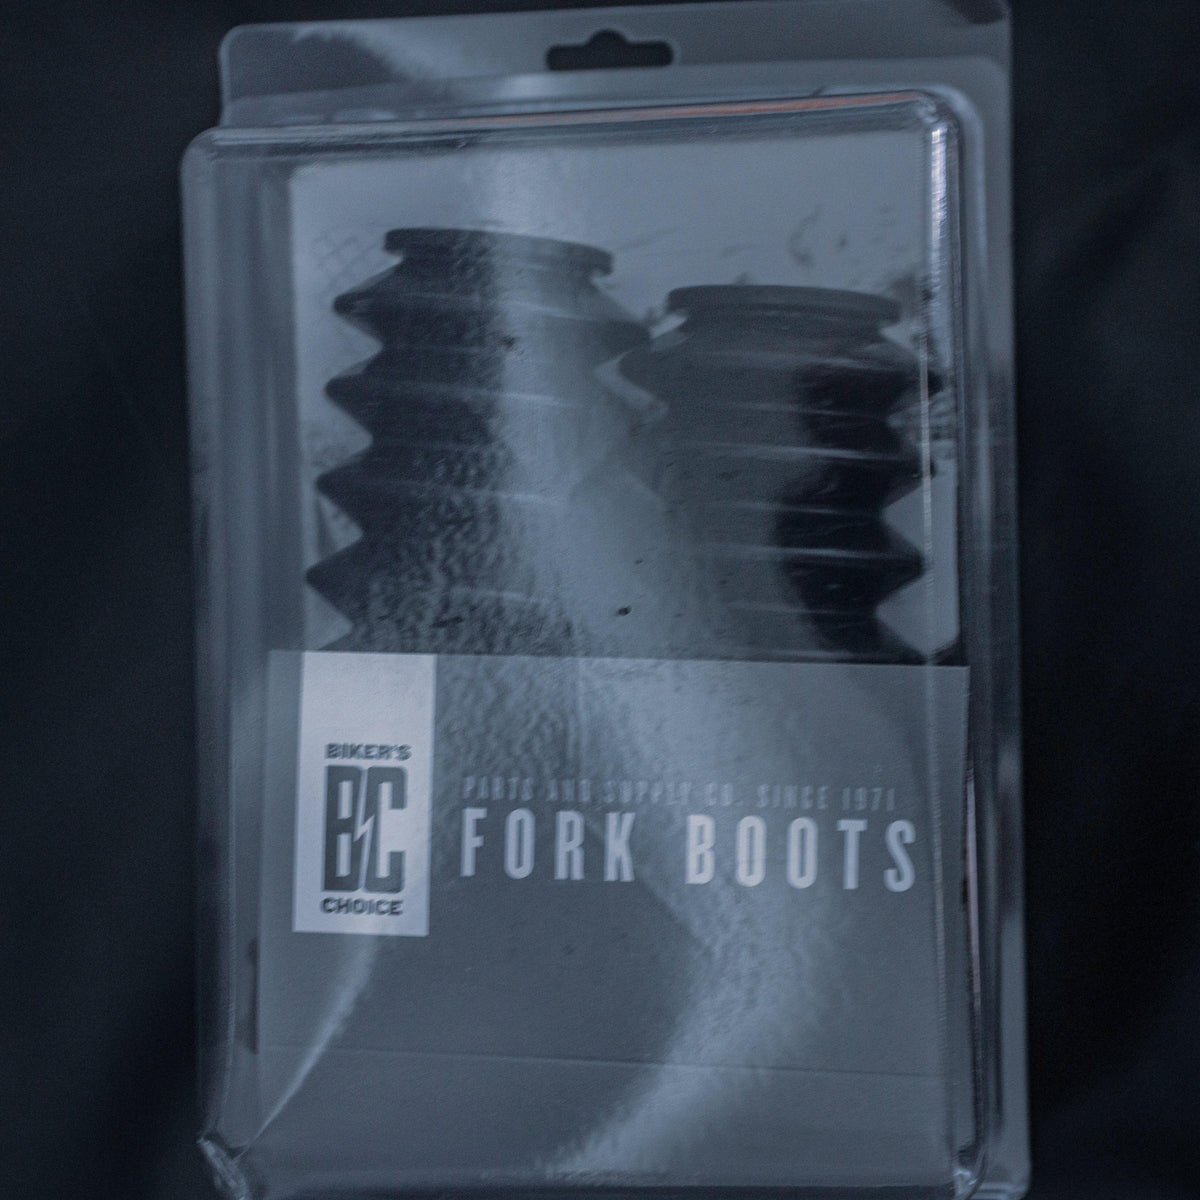 39mm Rubber Fork Boot Gaiters – Black.